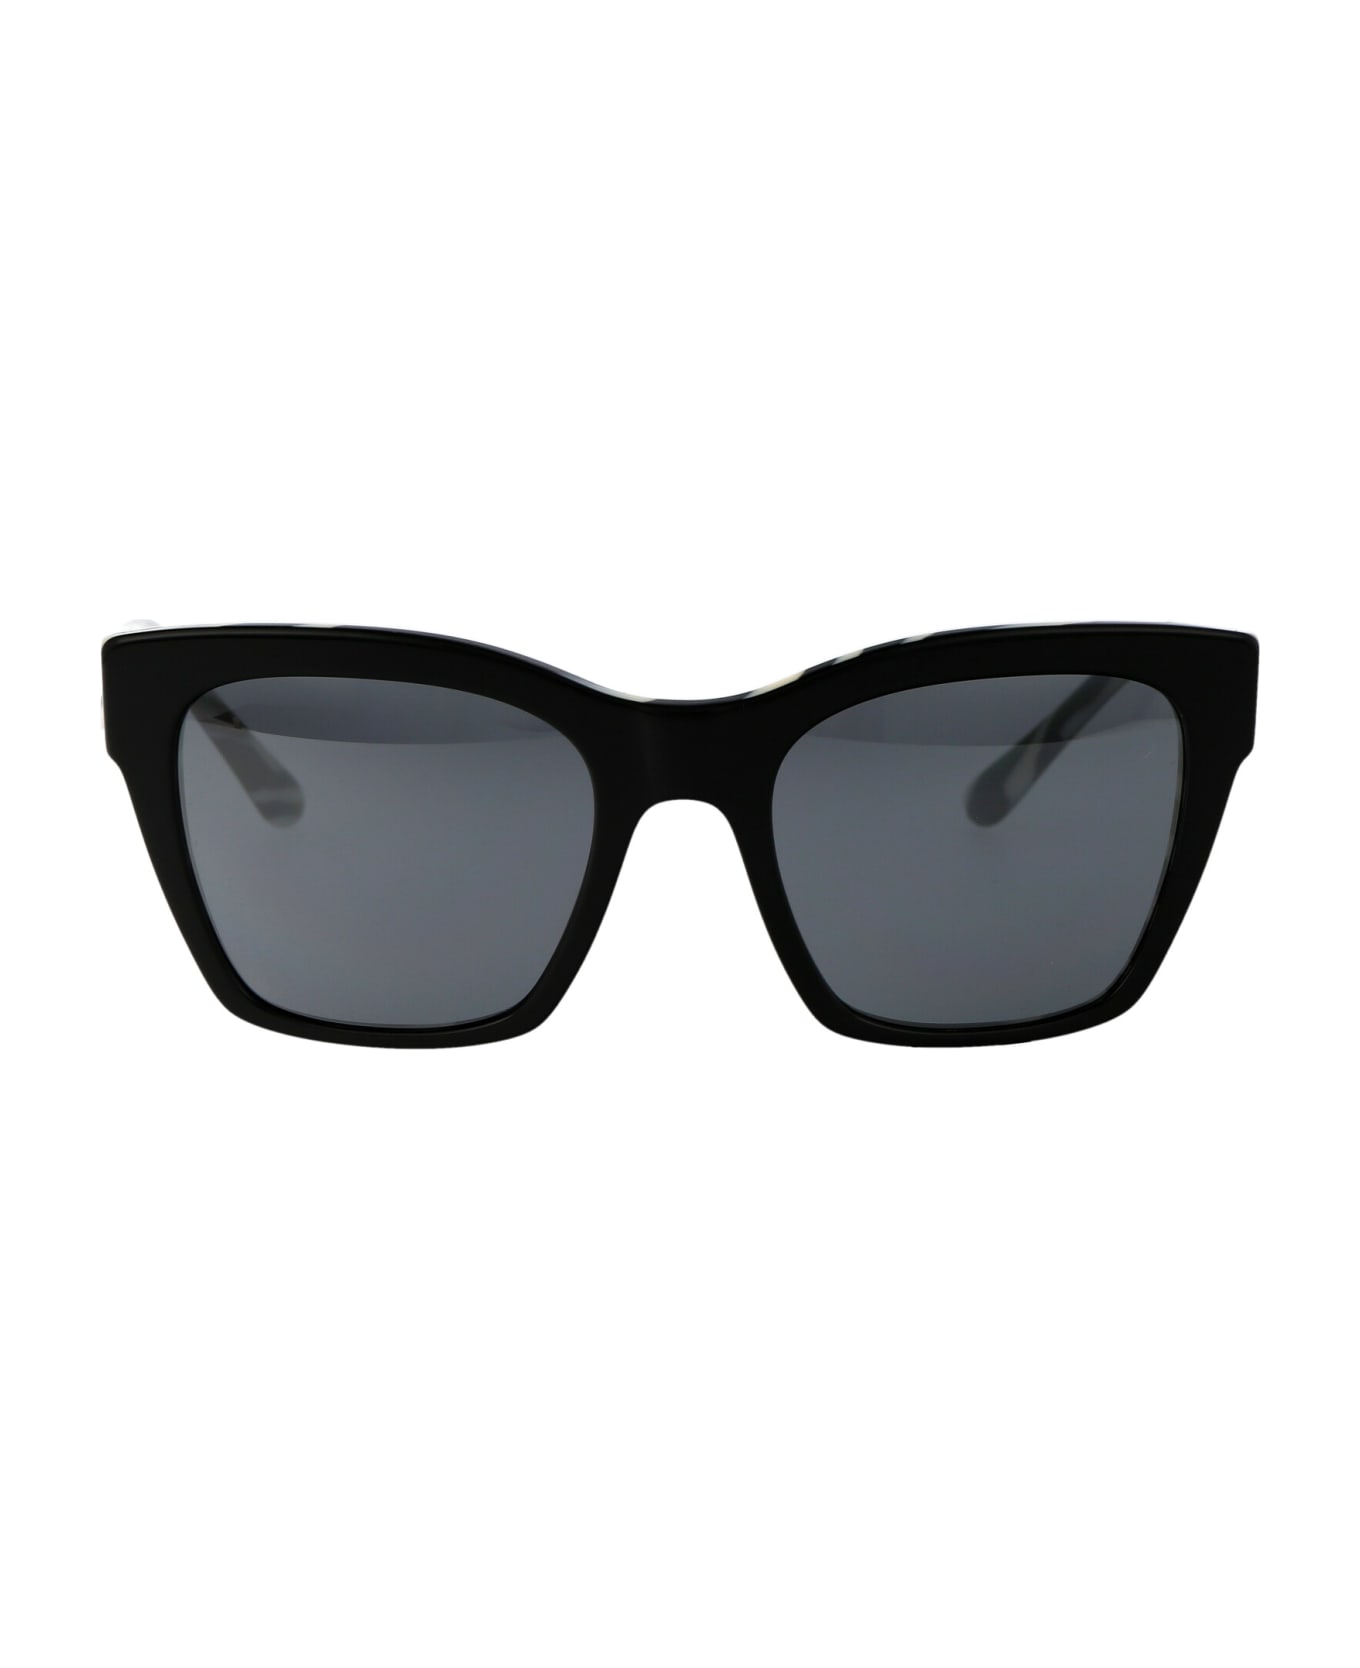 Dolce & Gabbana Eyewear 0dg4384 Sunglasses - 33726G Black On Zebra サングラス